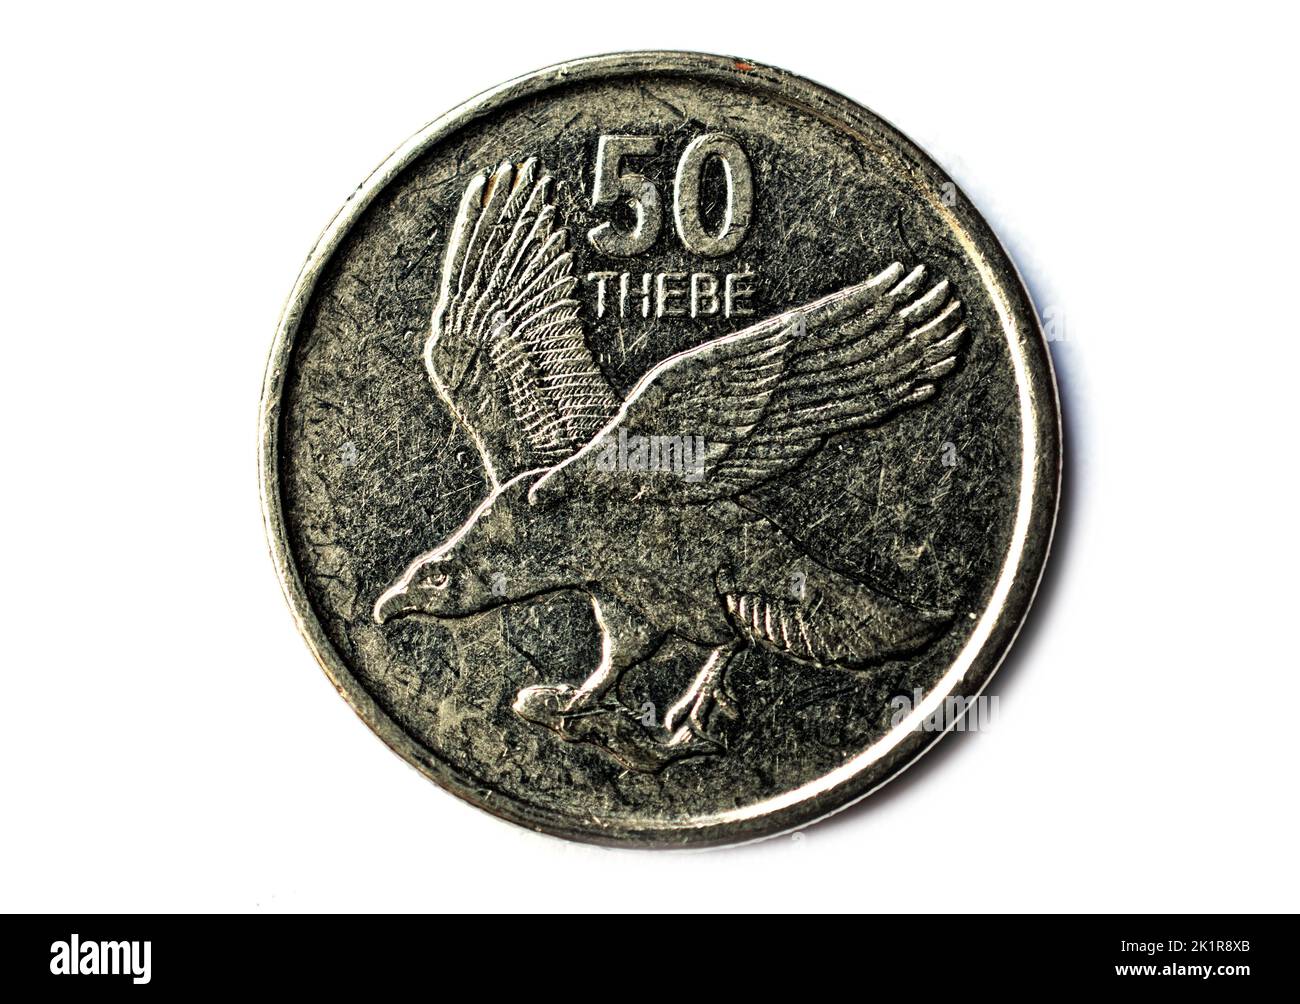 Photo coins Botswana,2013,  50 thebe, Stock Photo